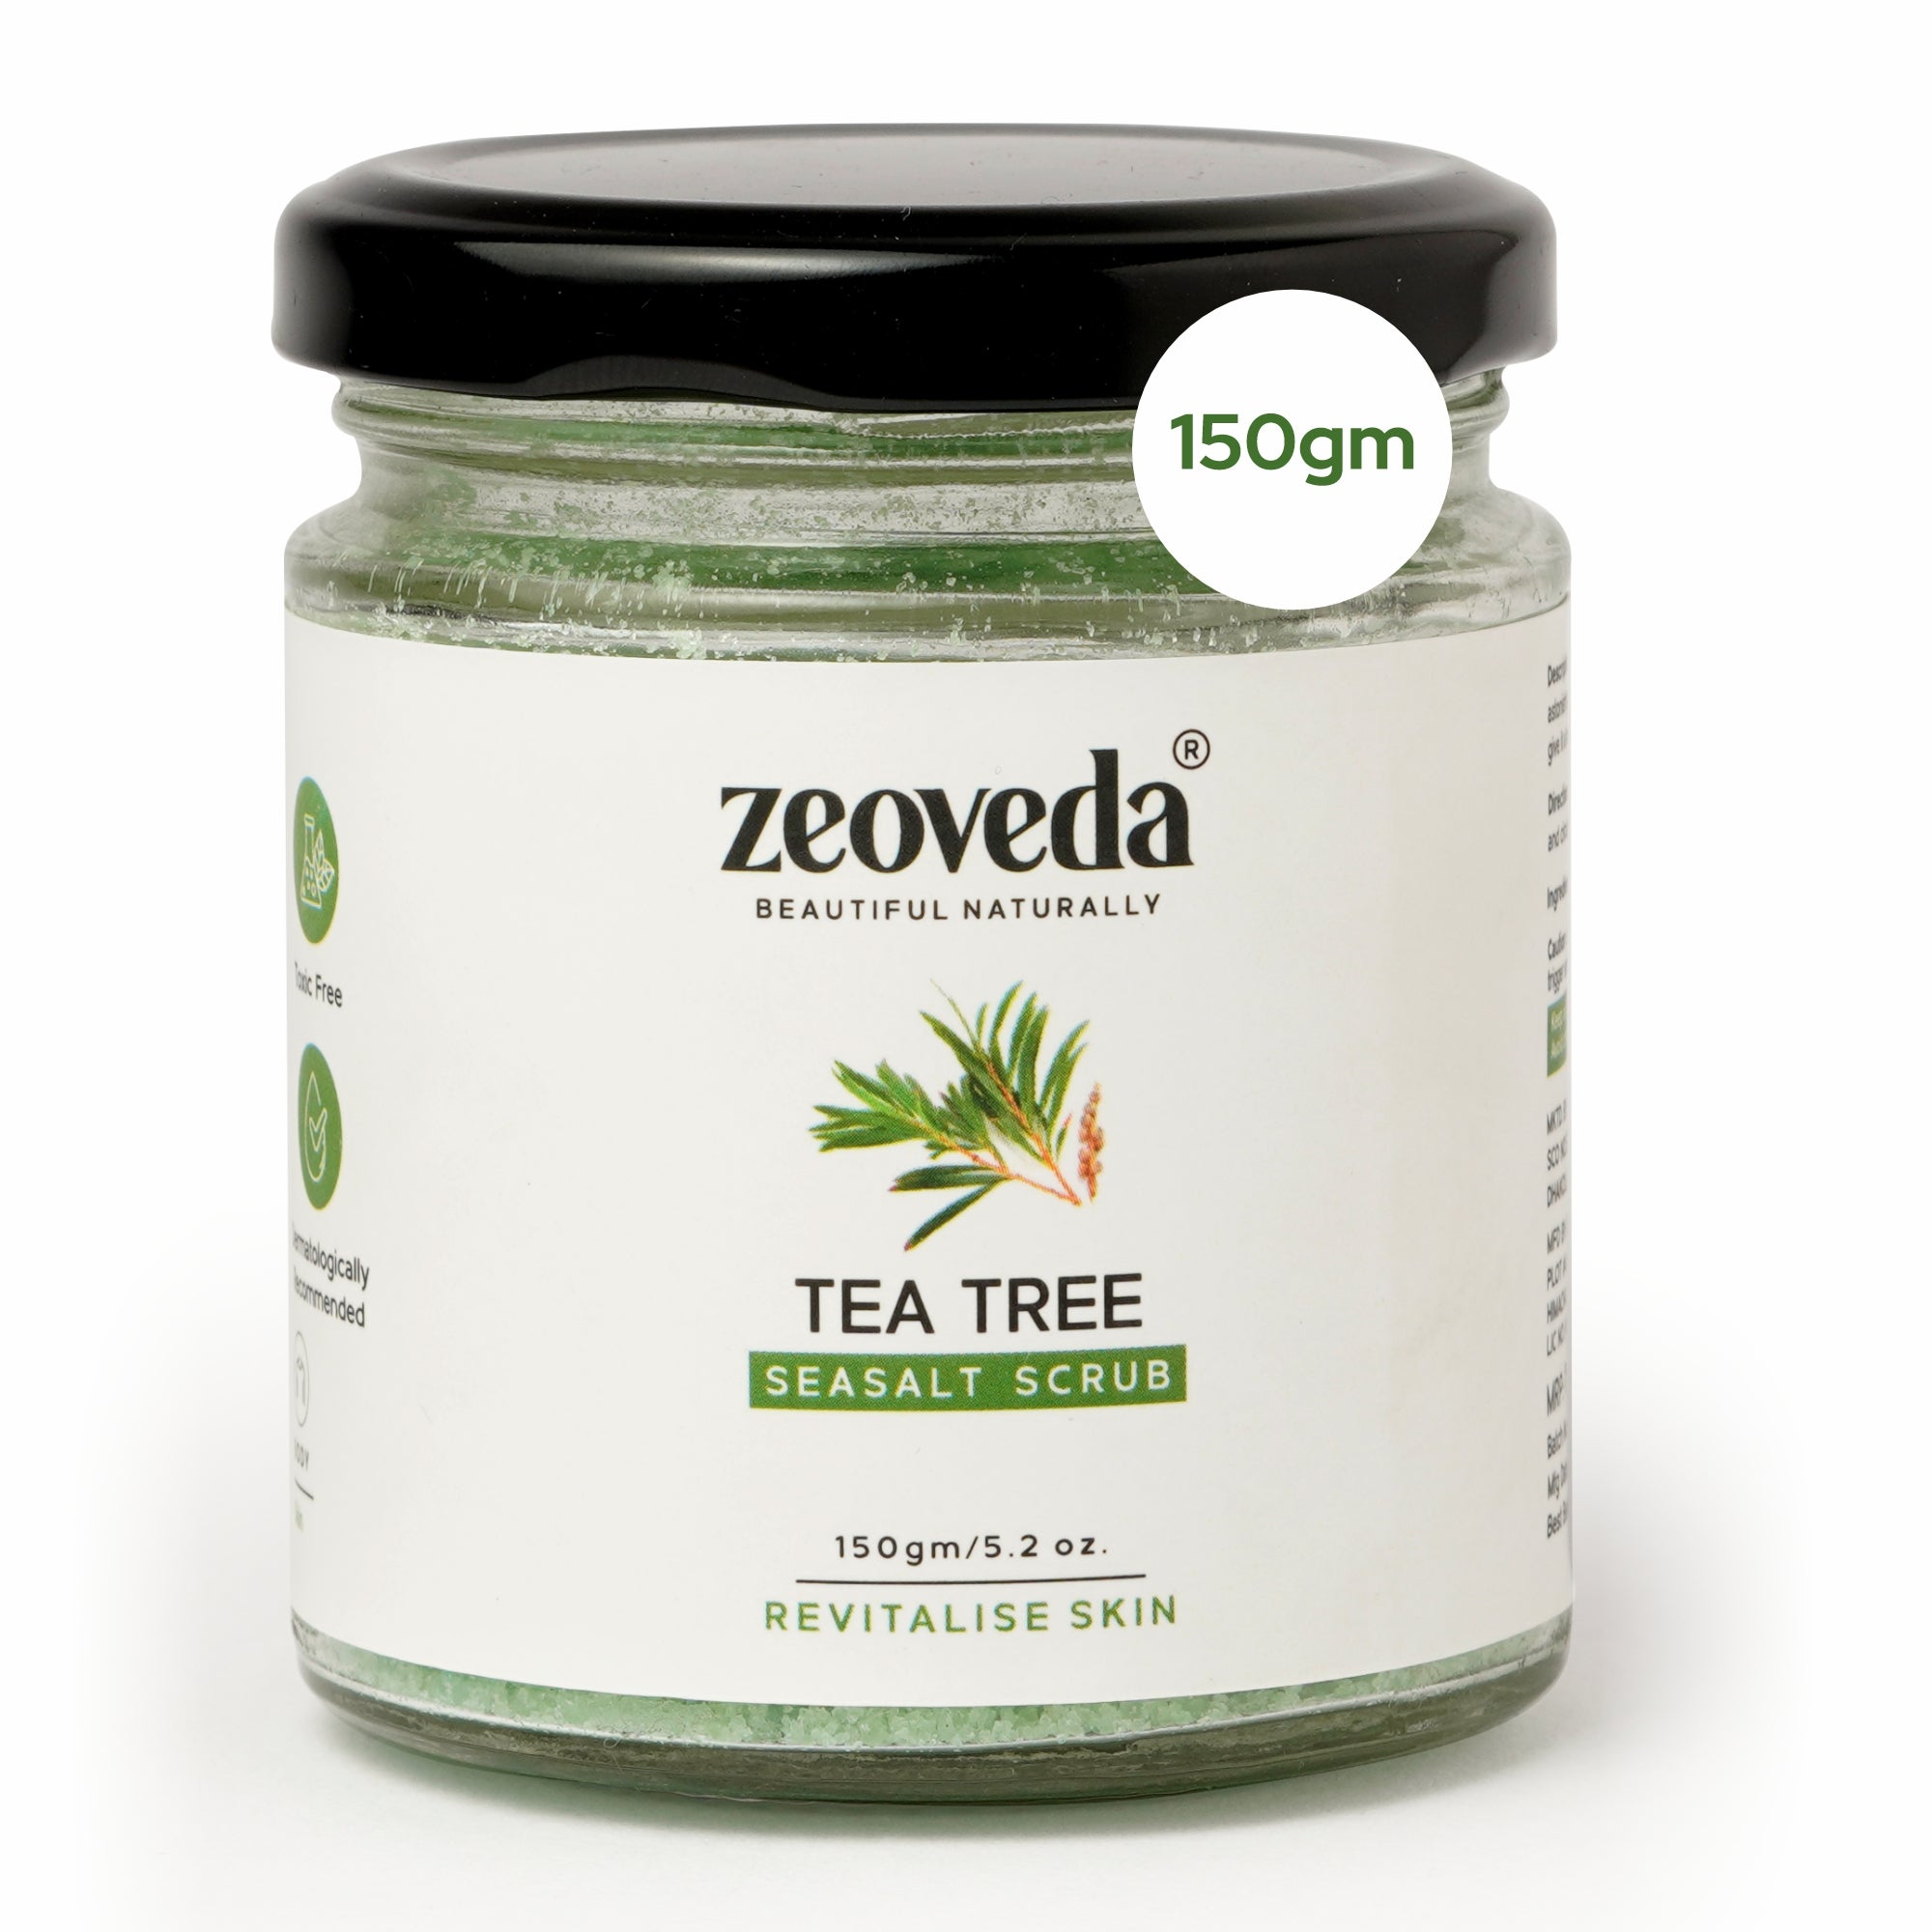 Tea Tree Scrub(150GM) + Vitamin C Face Wash(100ML) Combo For Skin Brightening & Pimple Free Skin